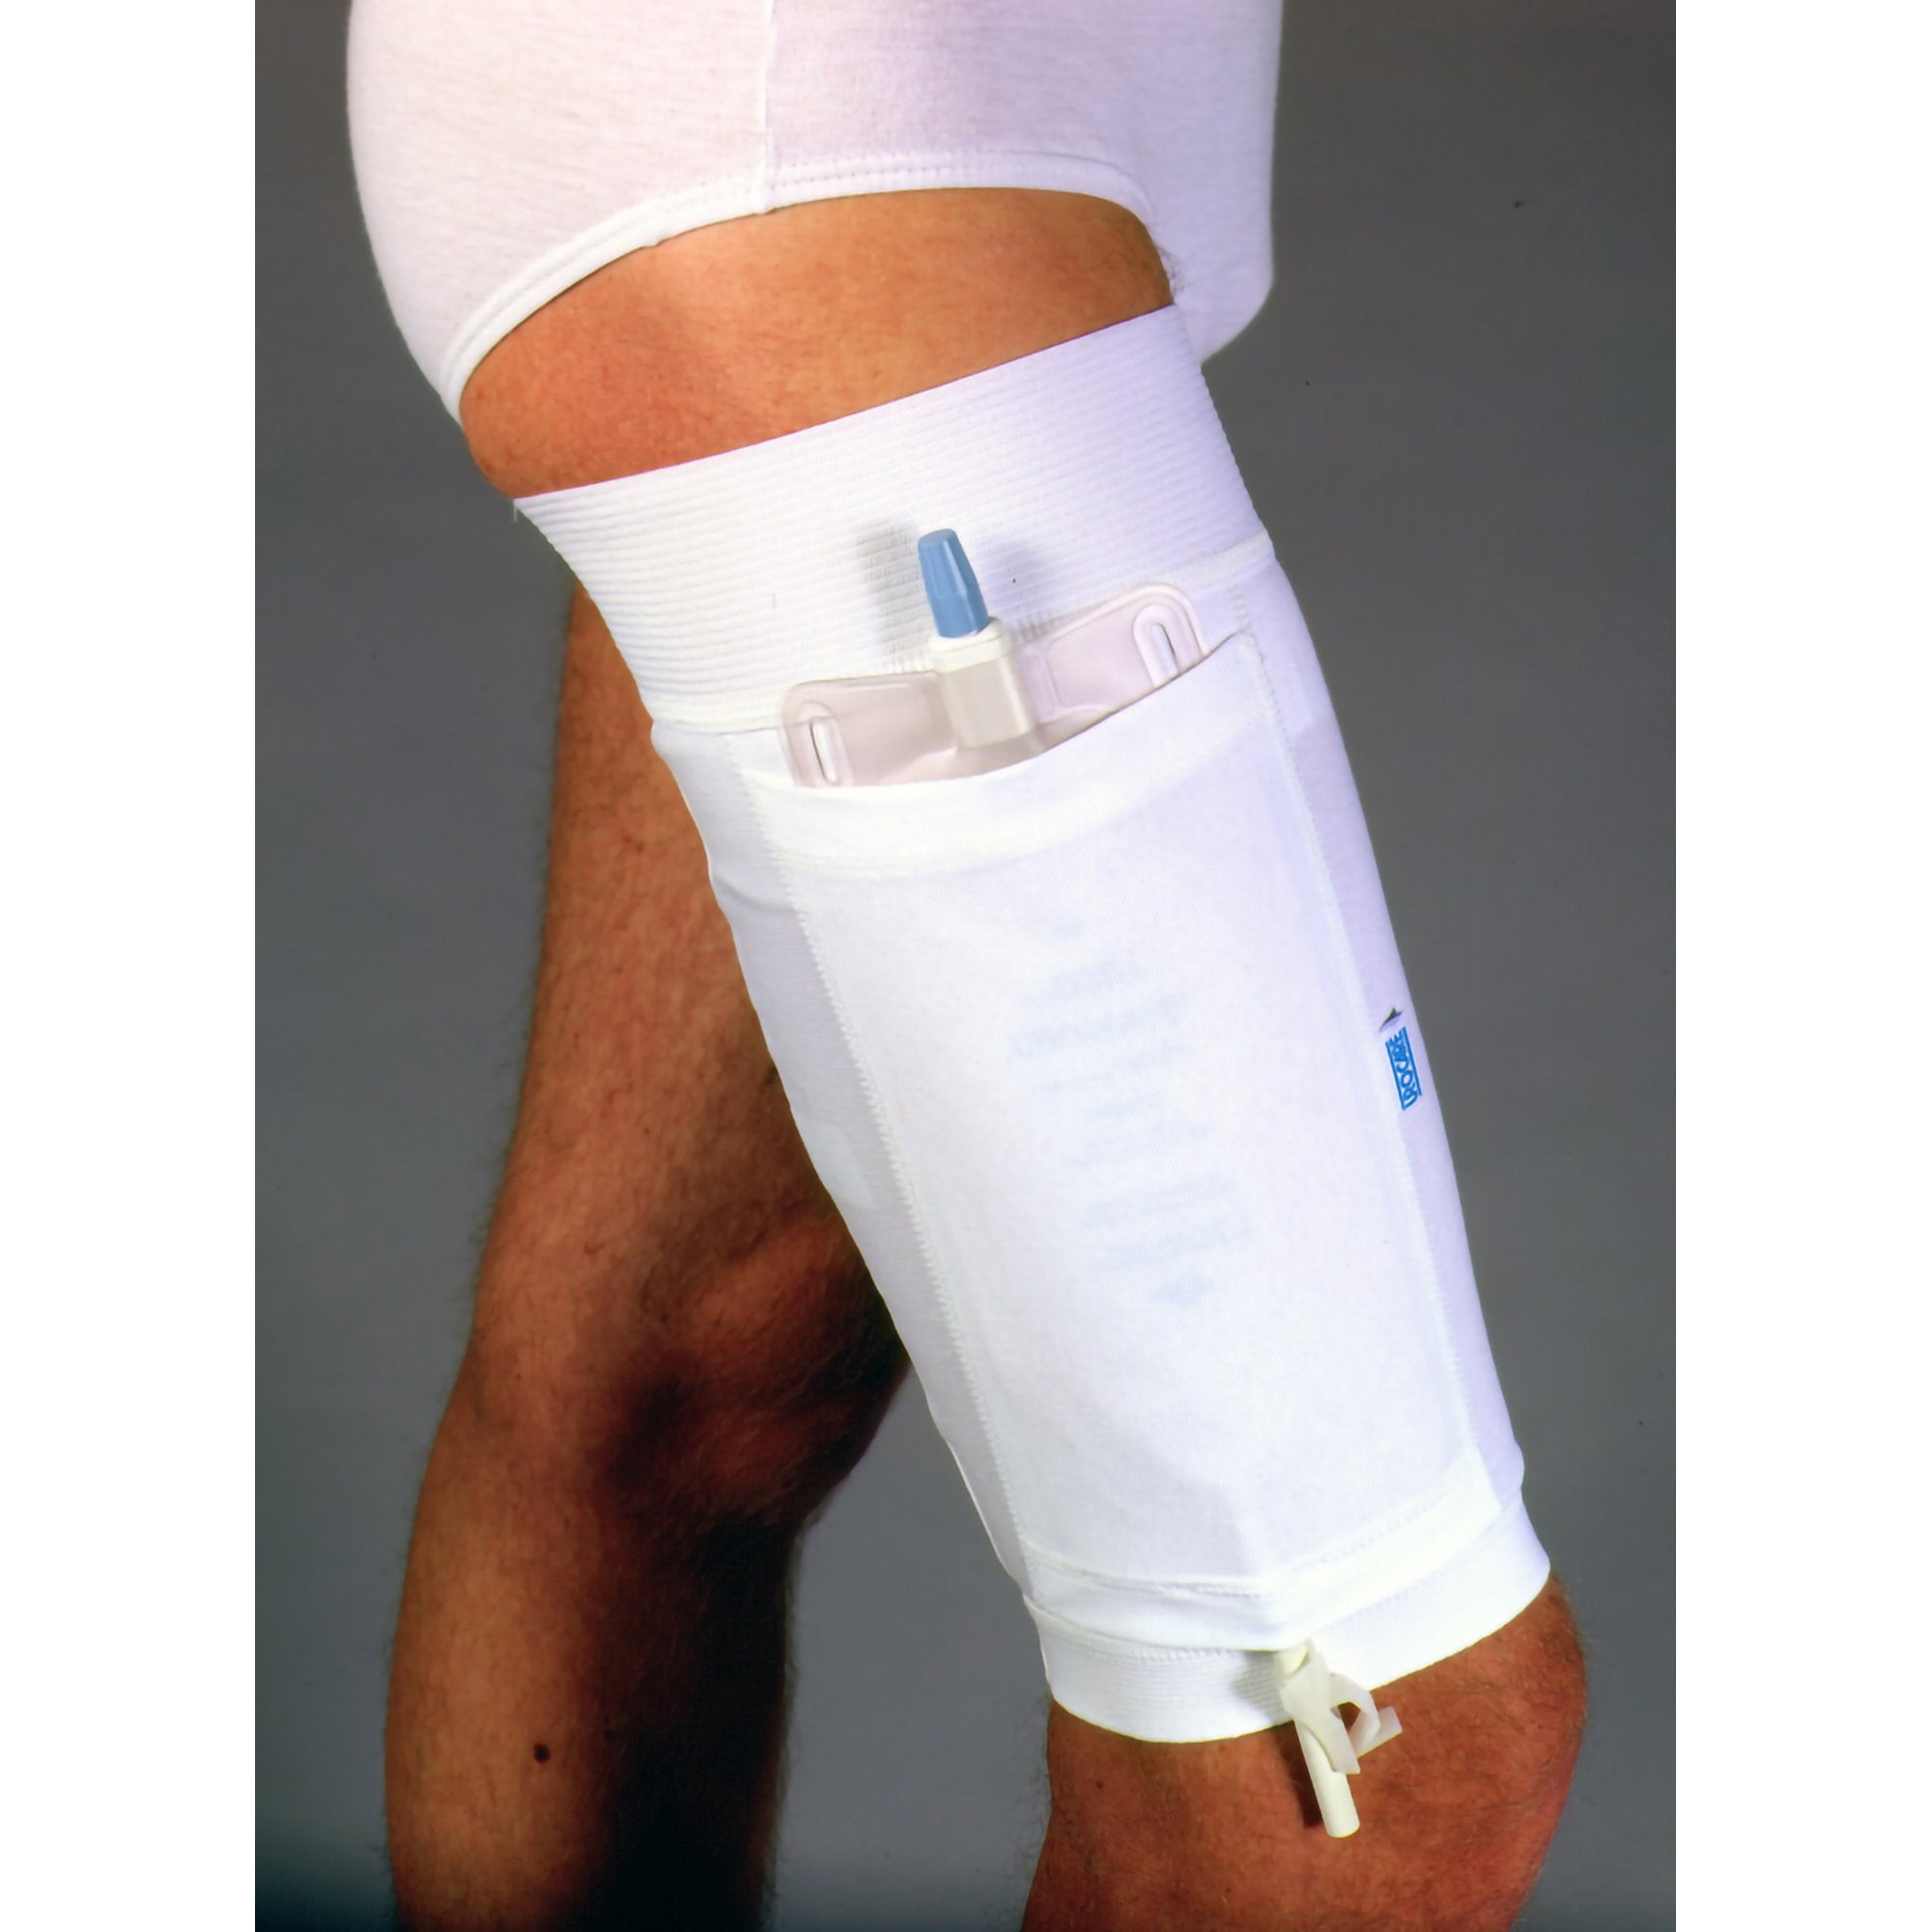 Leg Bag Holder Urocare® Medium, Upper Thigh: 22.75 Inch Diameter, Lower Thigh: 18.75 Inch Diameter, Can hold up to a 26 fl. oz. leg bag, Non-Sterile